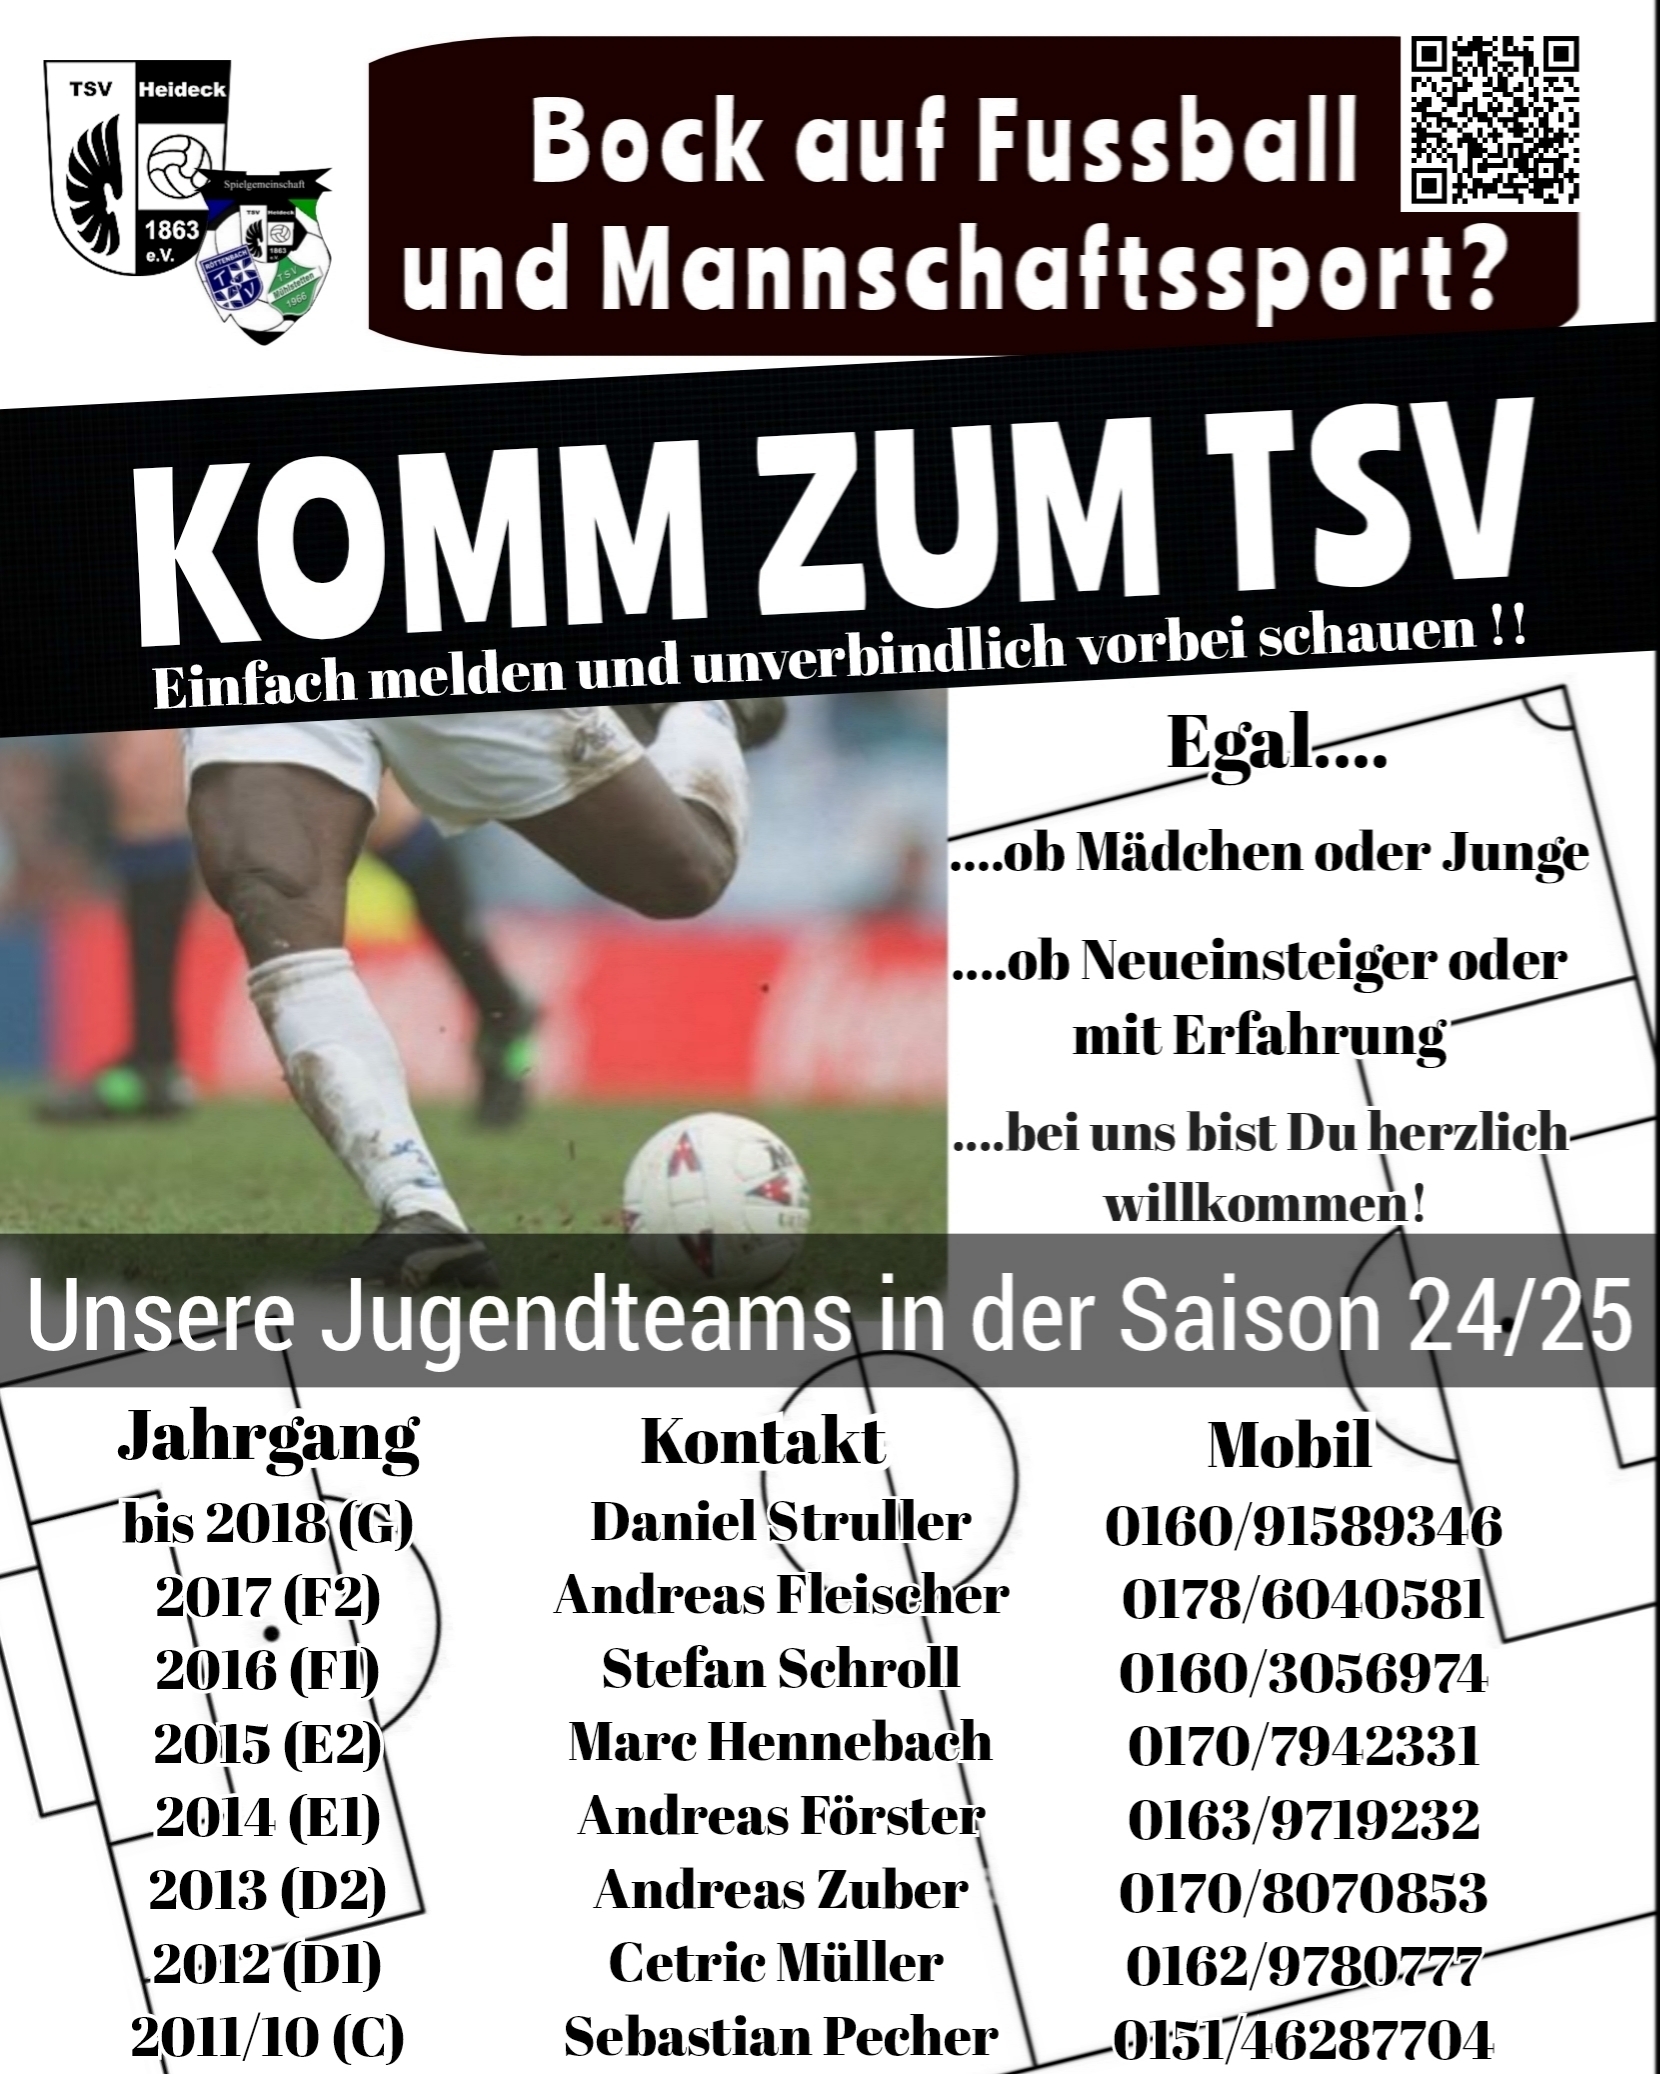 Featured image for “Komm zum TSV”